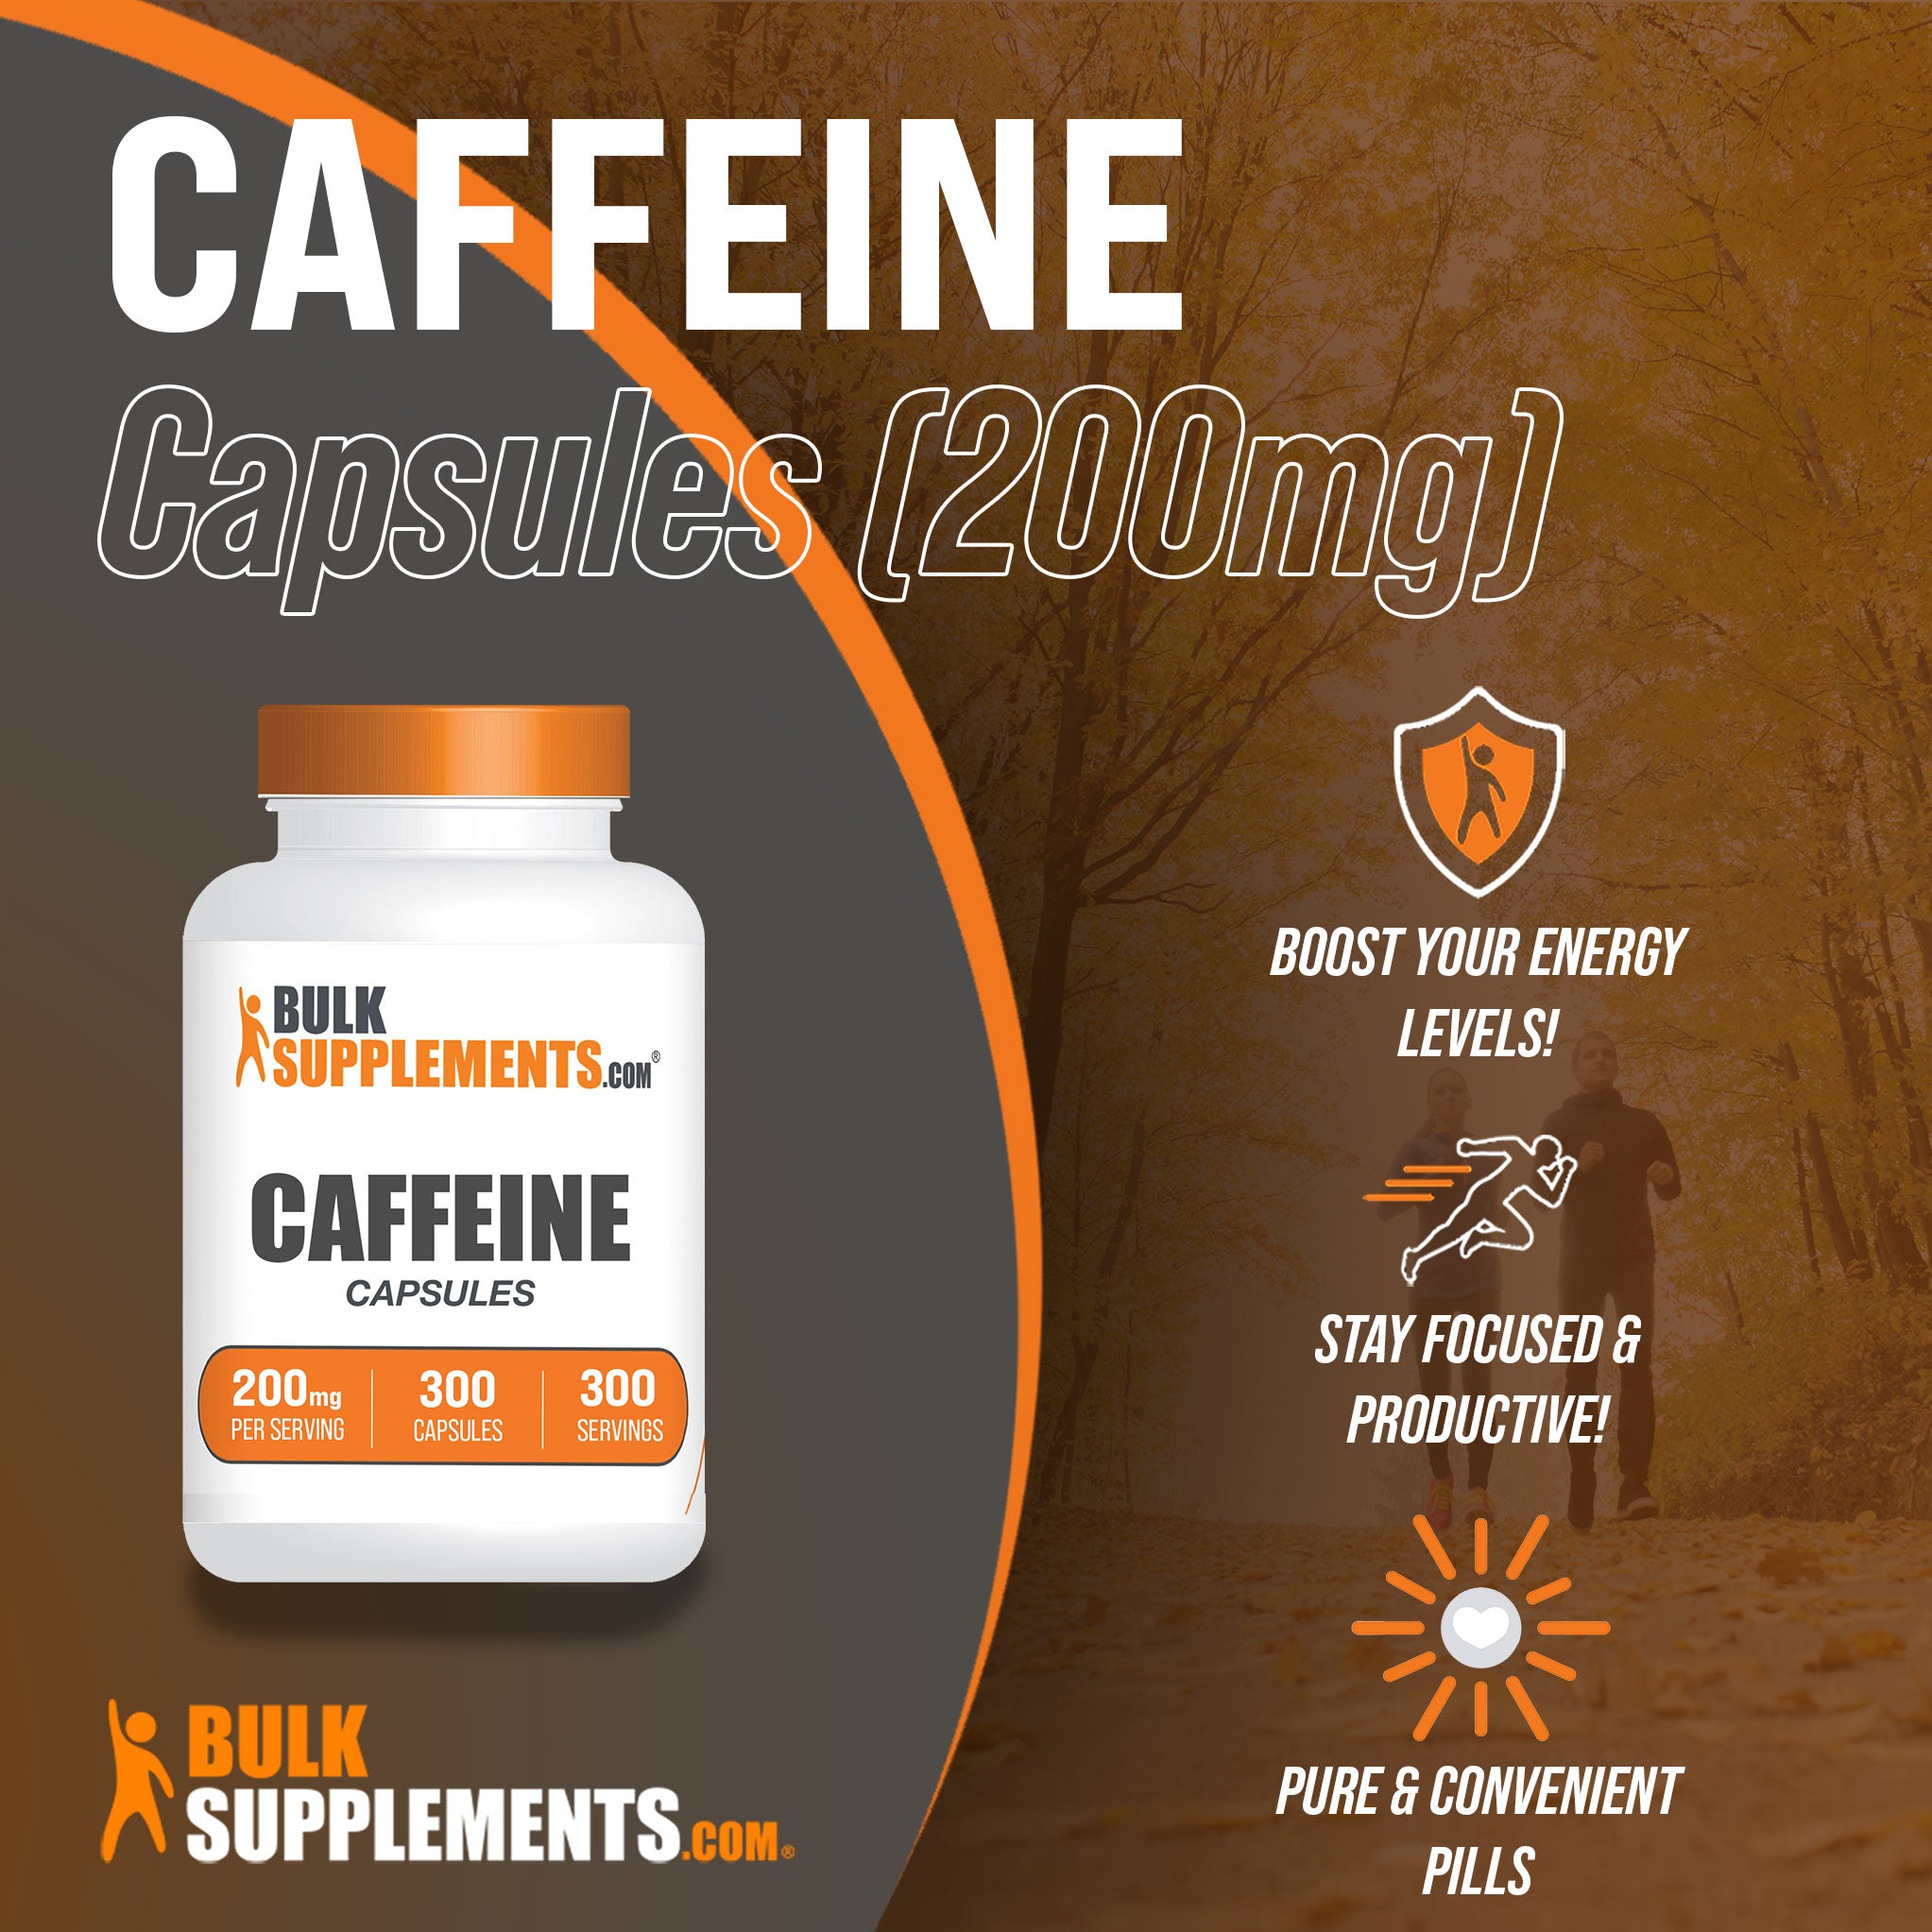 200mg 300 caffeine pills for energy boosts!